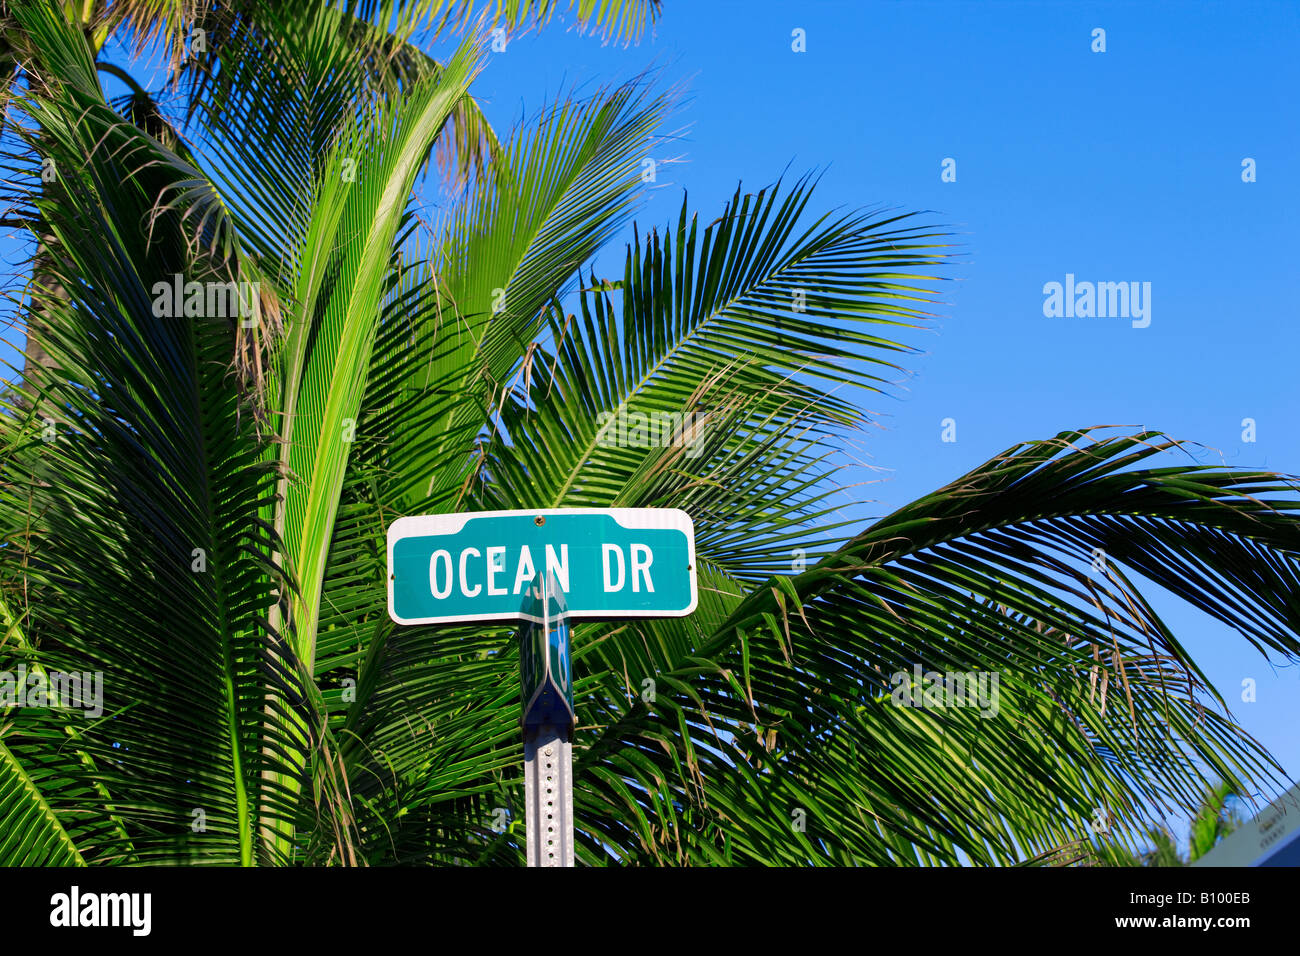 Street sign for Ocean Drive in South Beach, Miami Beach, Florida Stock Photo